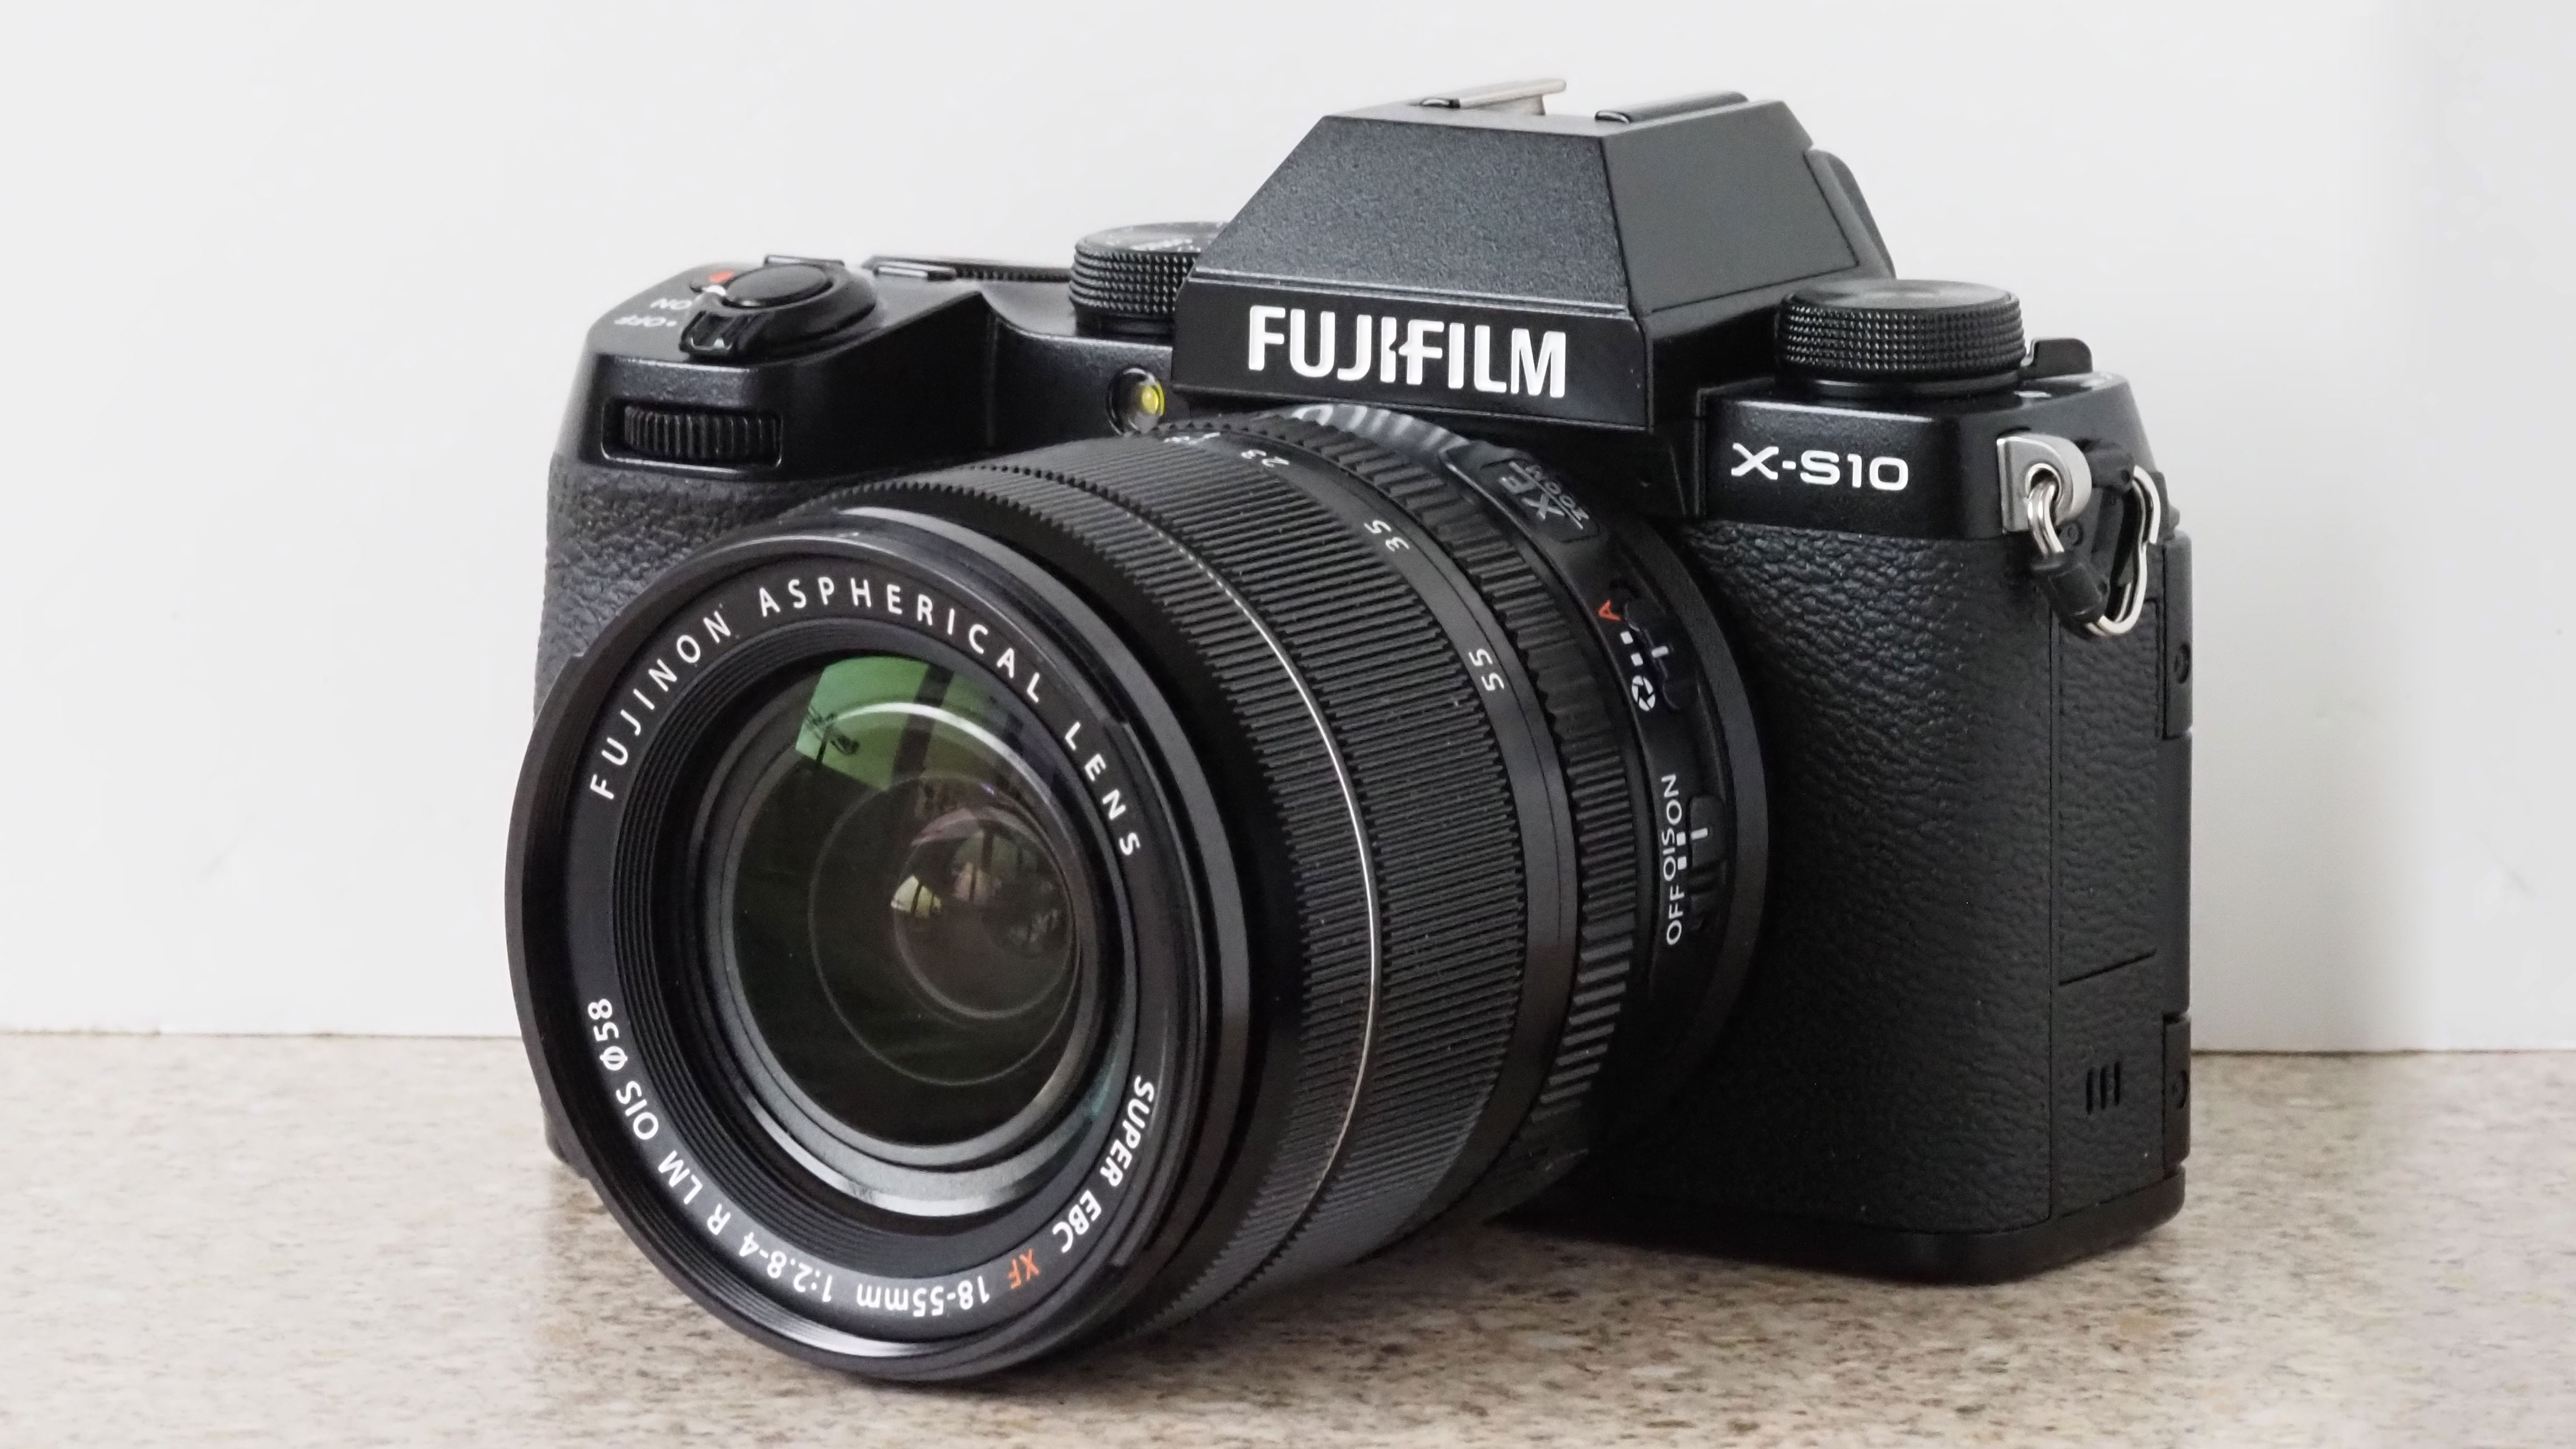 Best Fujifilm camera: Fujifilm x-s10